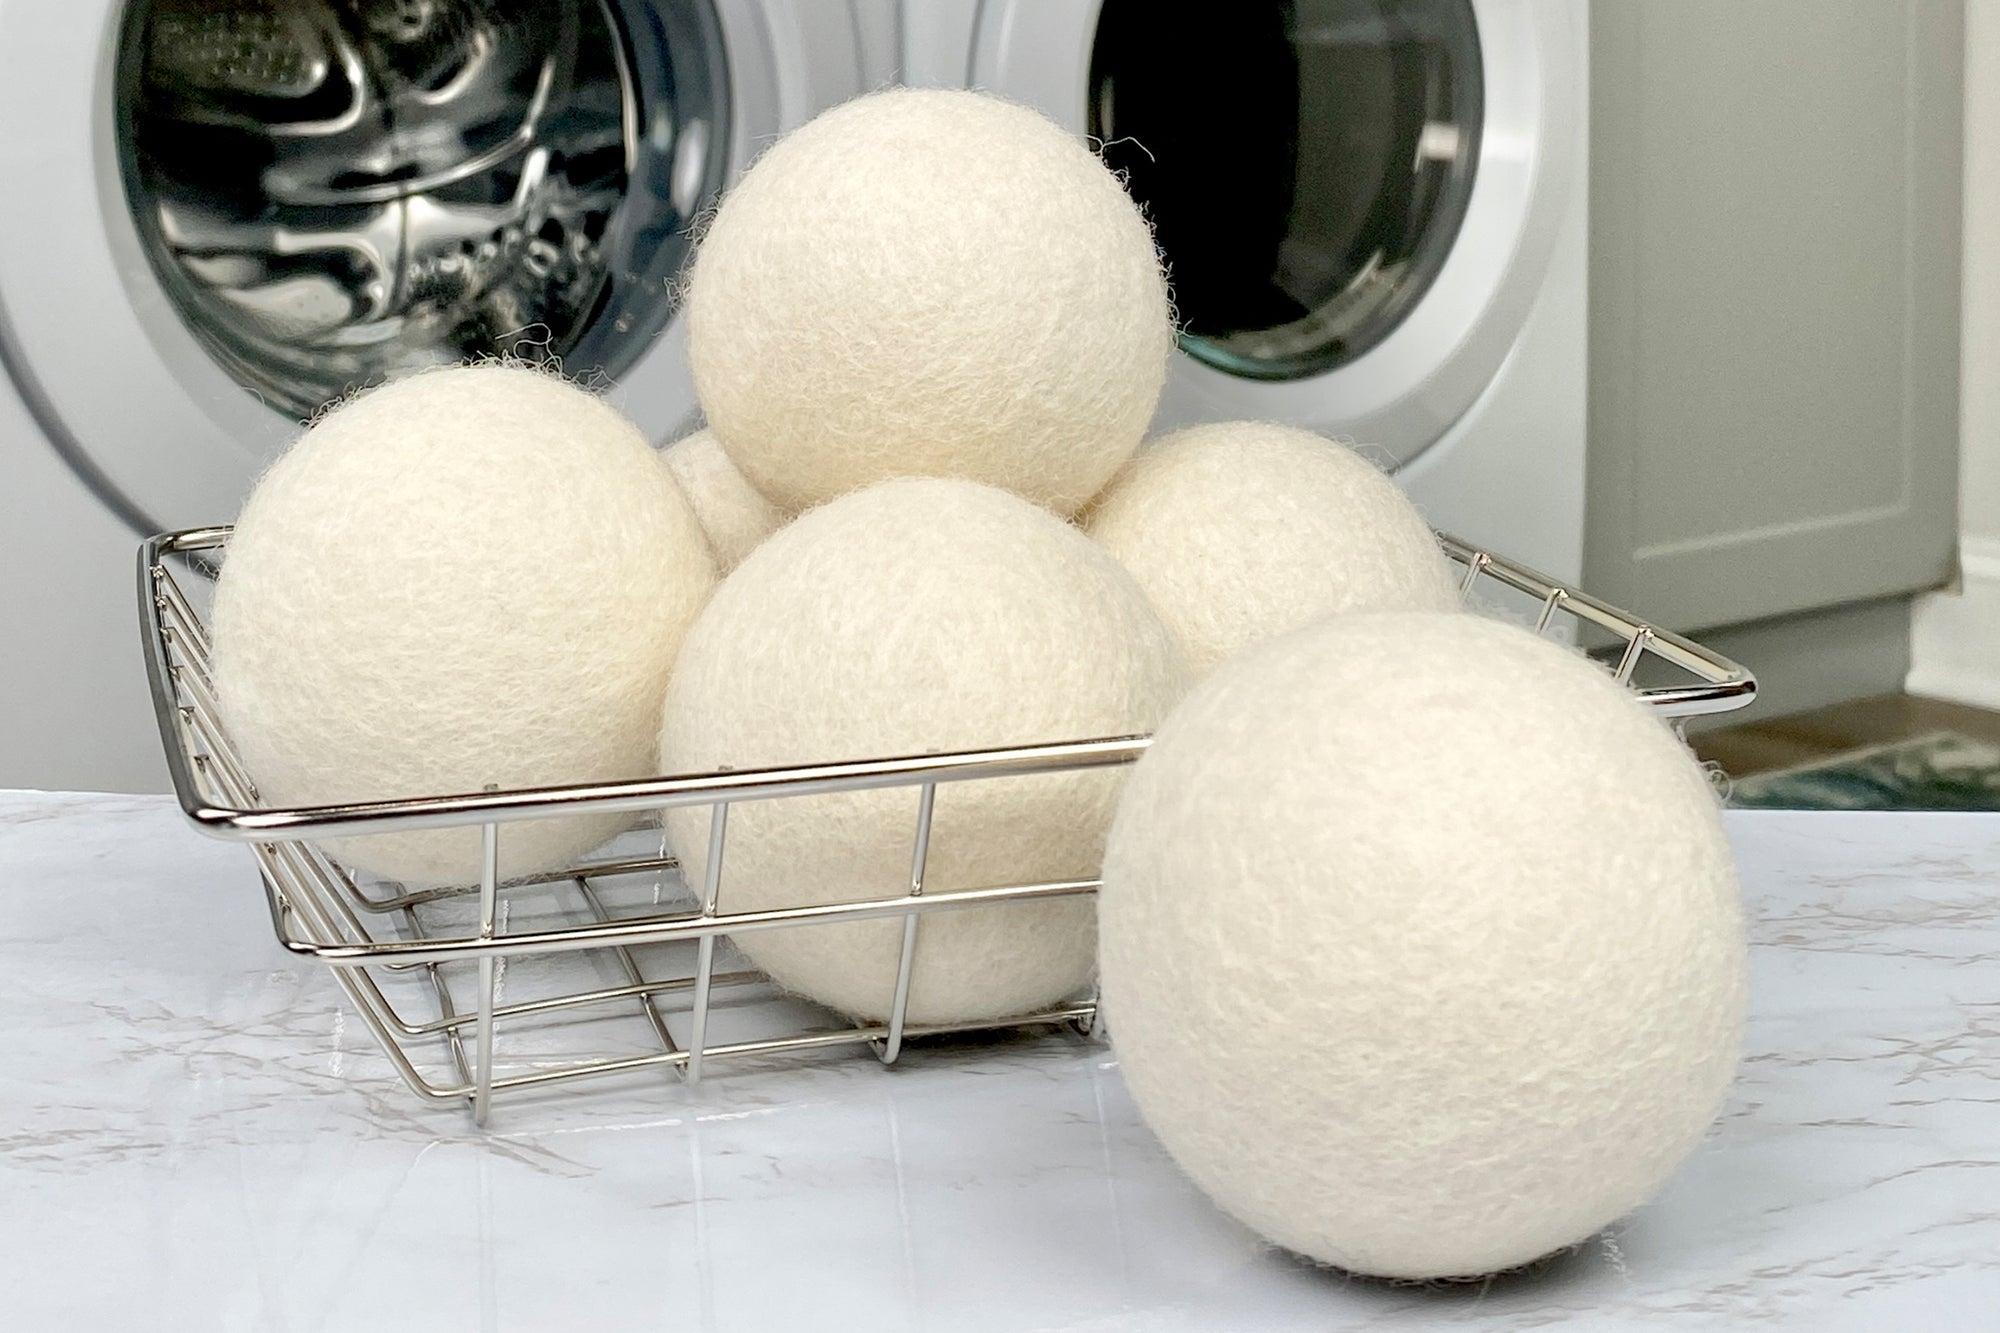 Life-Changing] Laundry Secret: Wool Dryer Balls  Laundry Hack - Heritage  Park Laundry Essentials